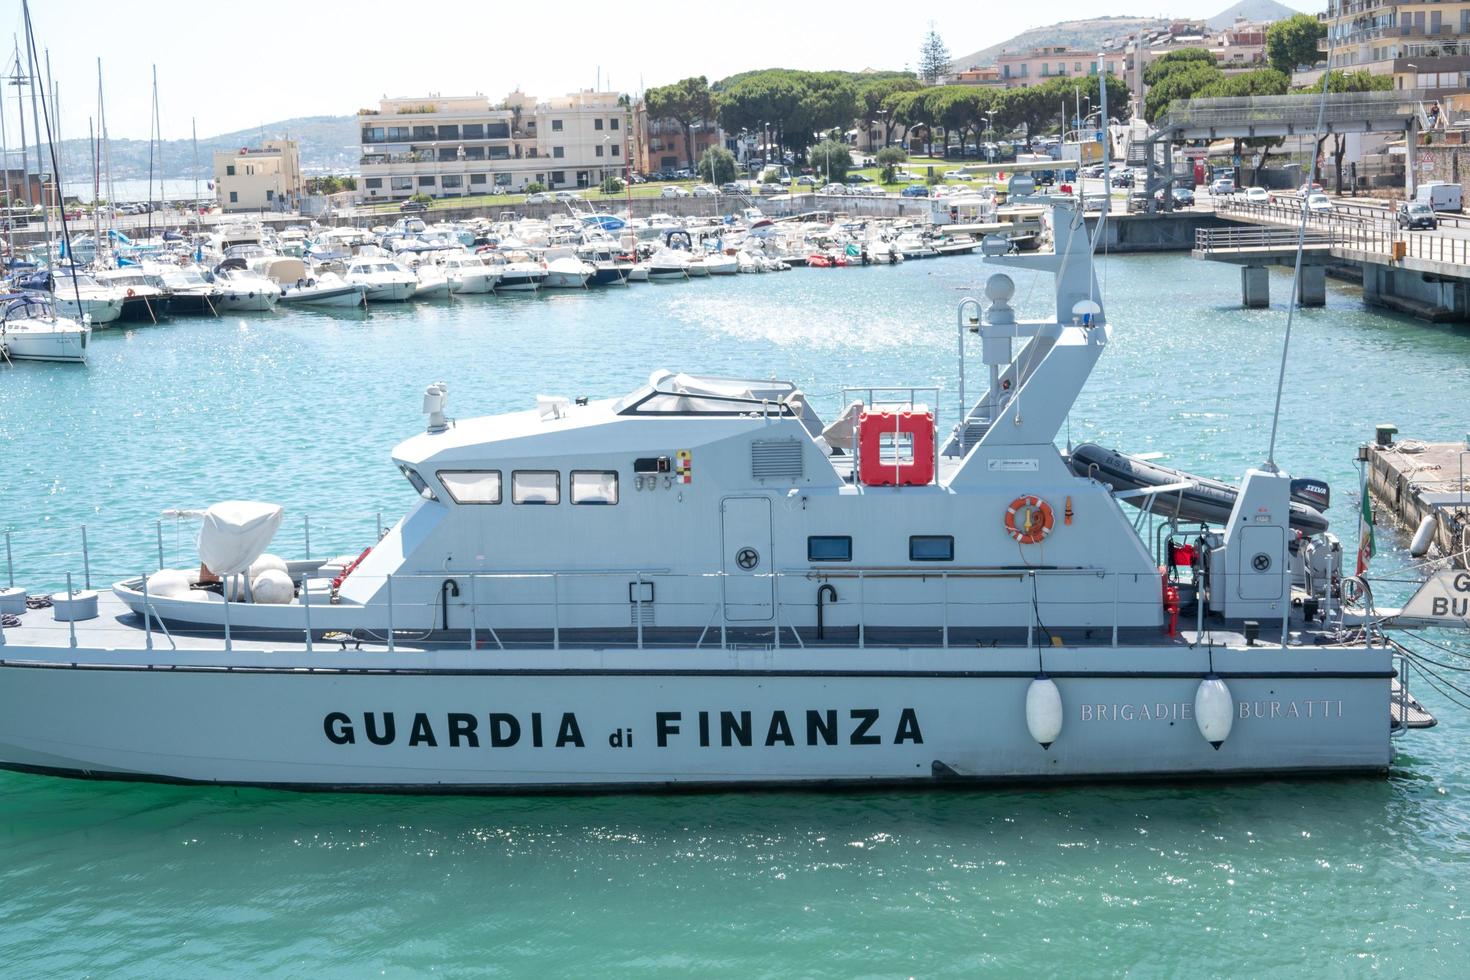 formia, italia, 15 de julio de 2021 - barco patrullero de la guardia financiera italiana foto